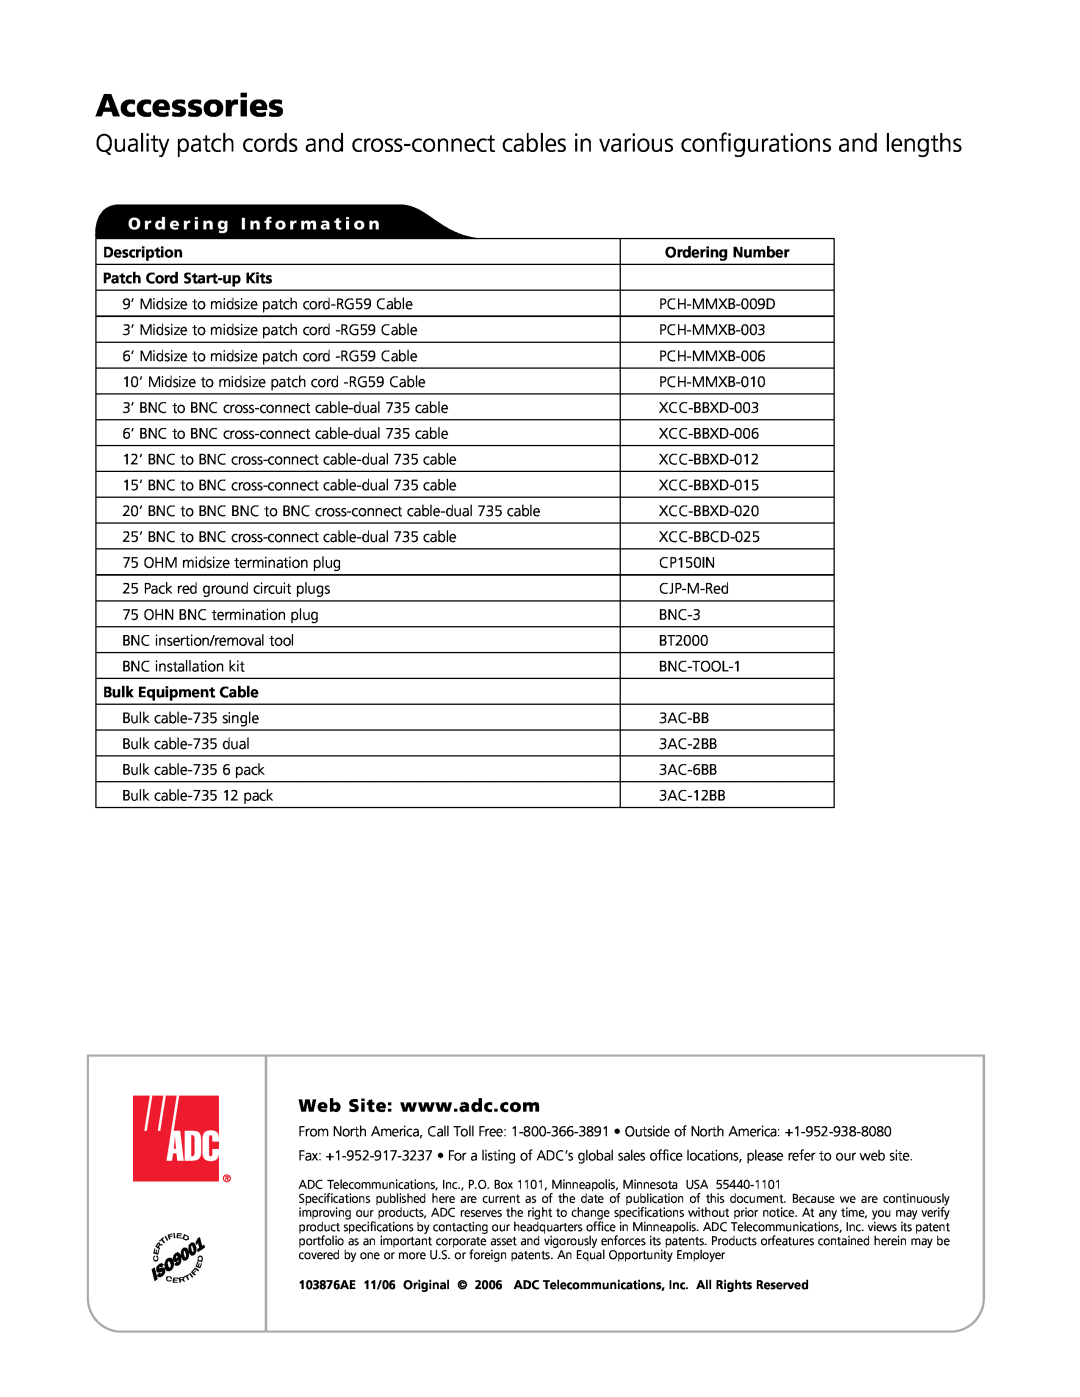 ADC DSX-4R (RZX3) Accessories, O r d e r i n g I n f o r m a t i o n, Description, Ordering Number, Bulk Equipment Cable 